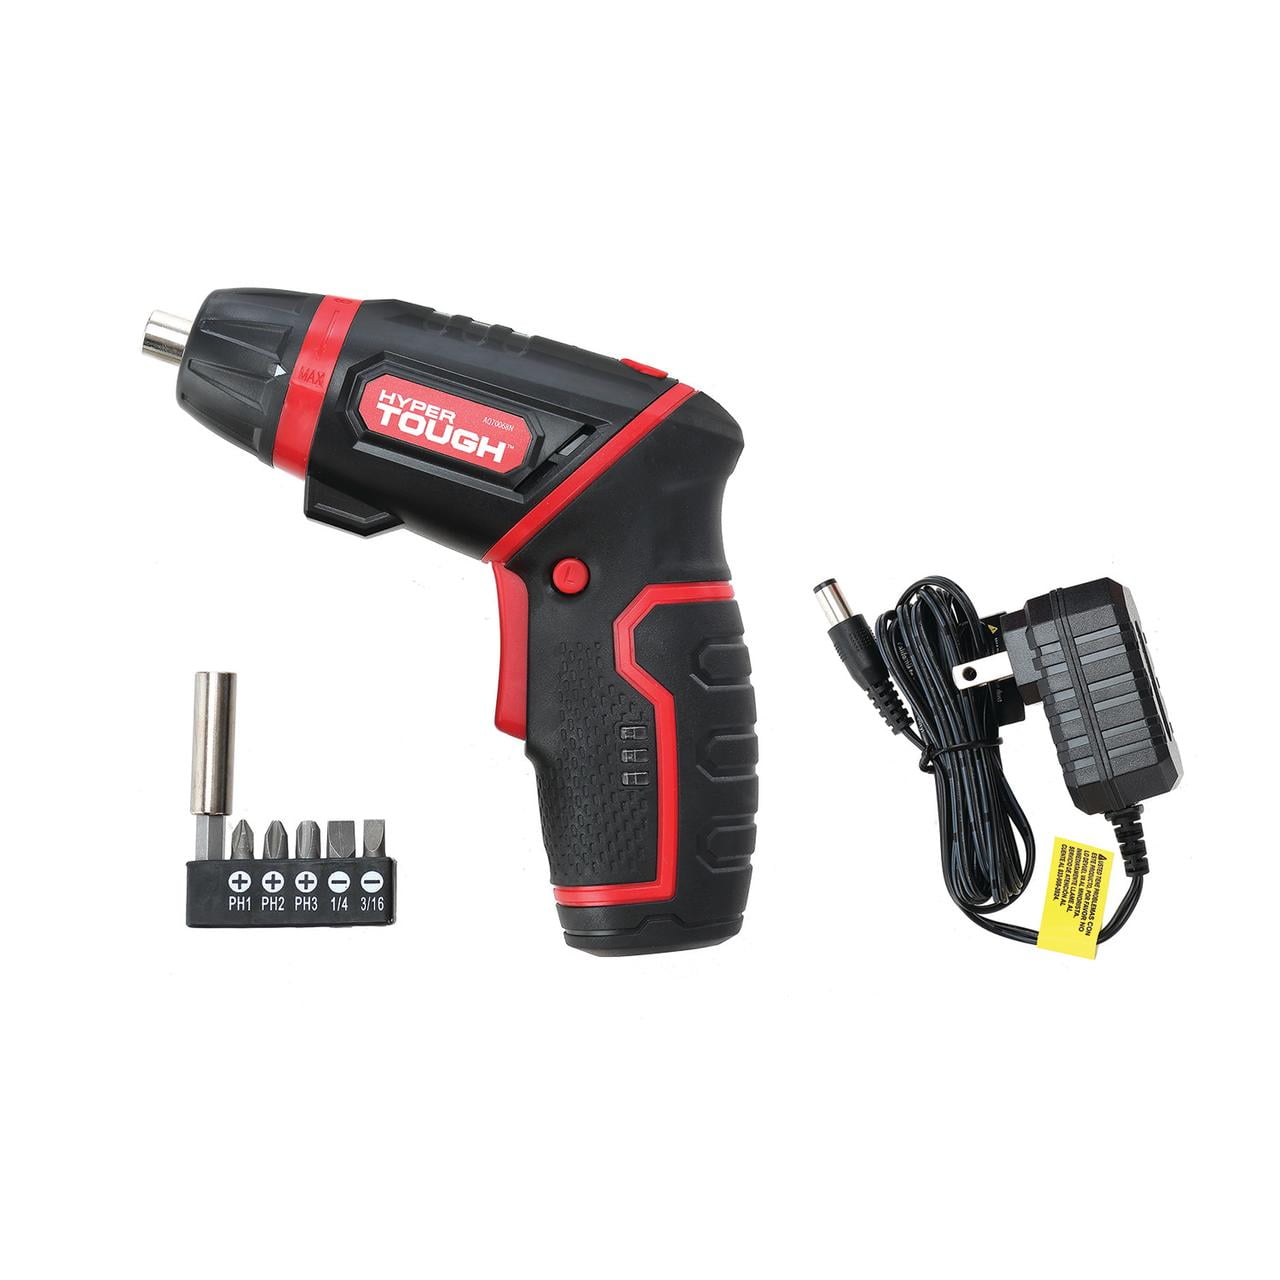 Electric precision screwdriver,drill, flashlight,Shop home tool